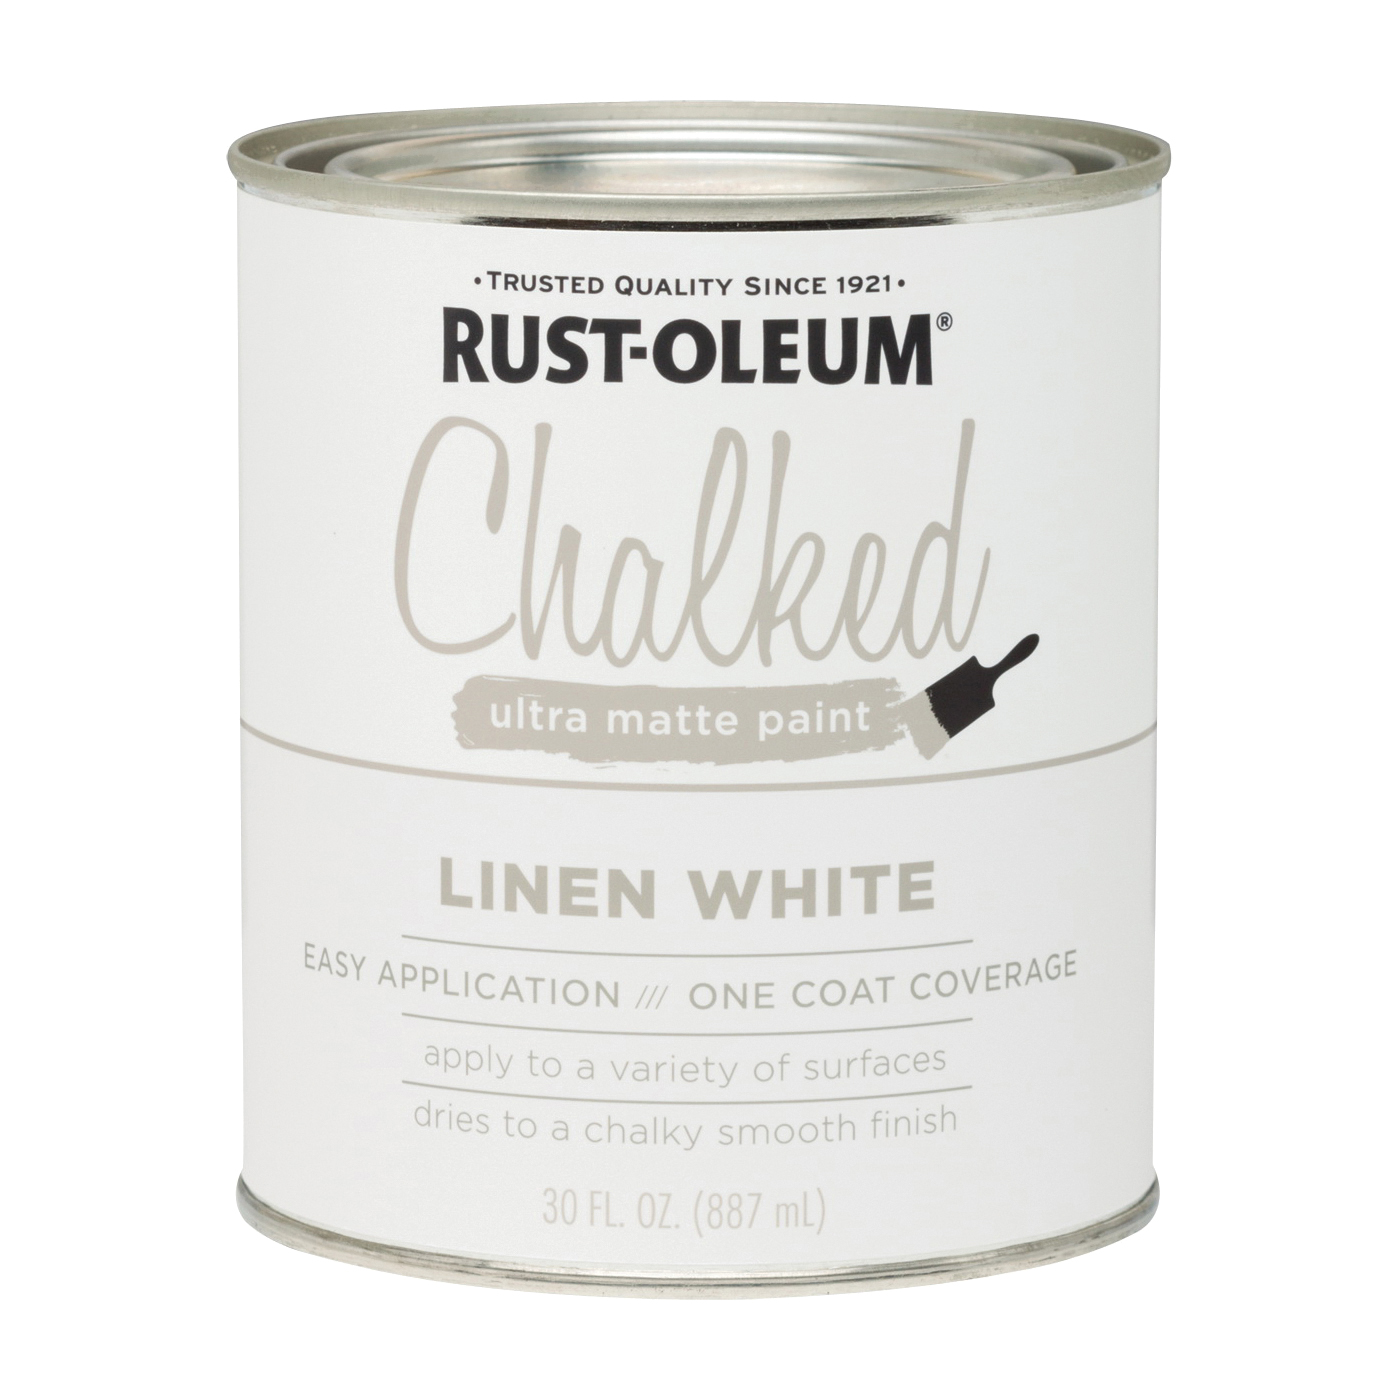 Chalked 285140 Chalked Paint, Ultra Matte, Linen White, 30 oz, Quart